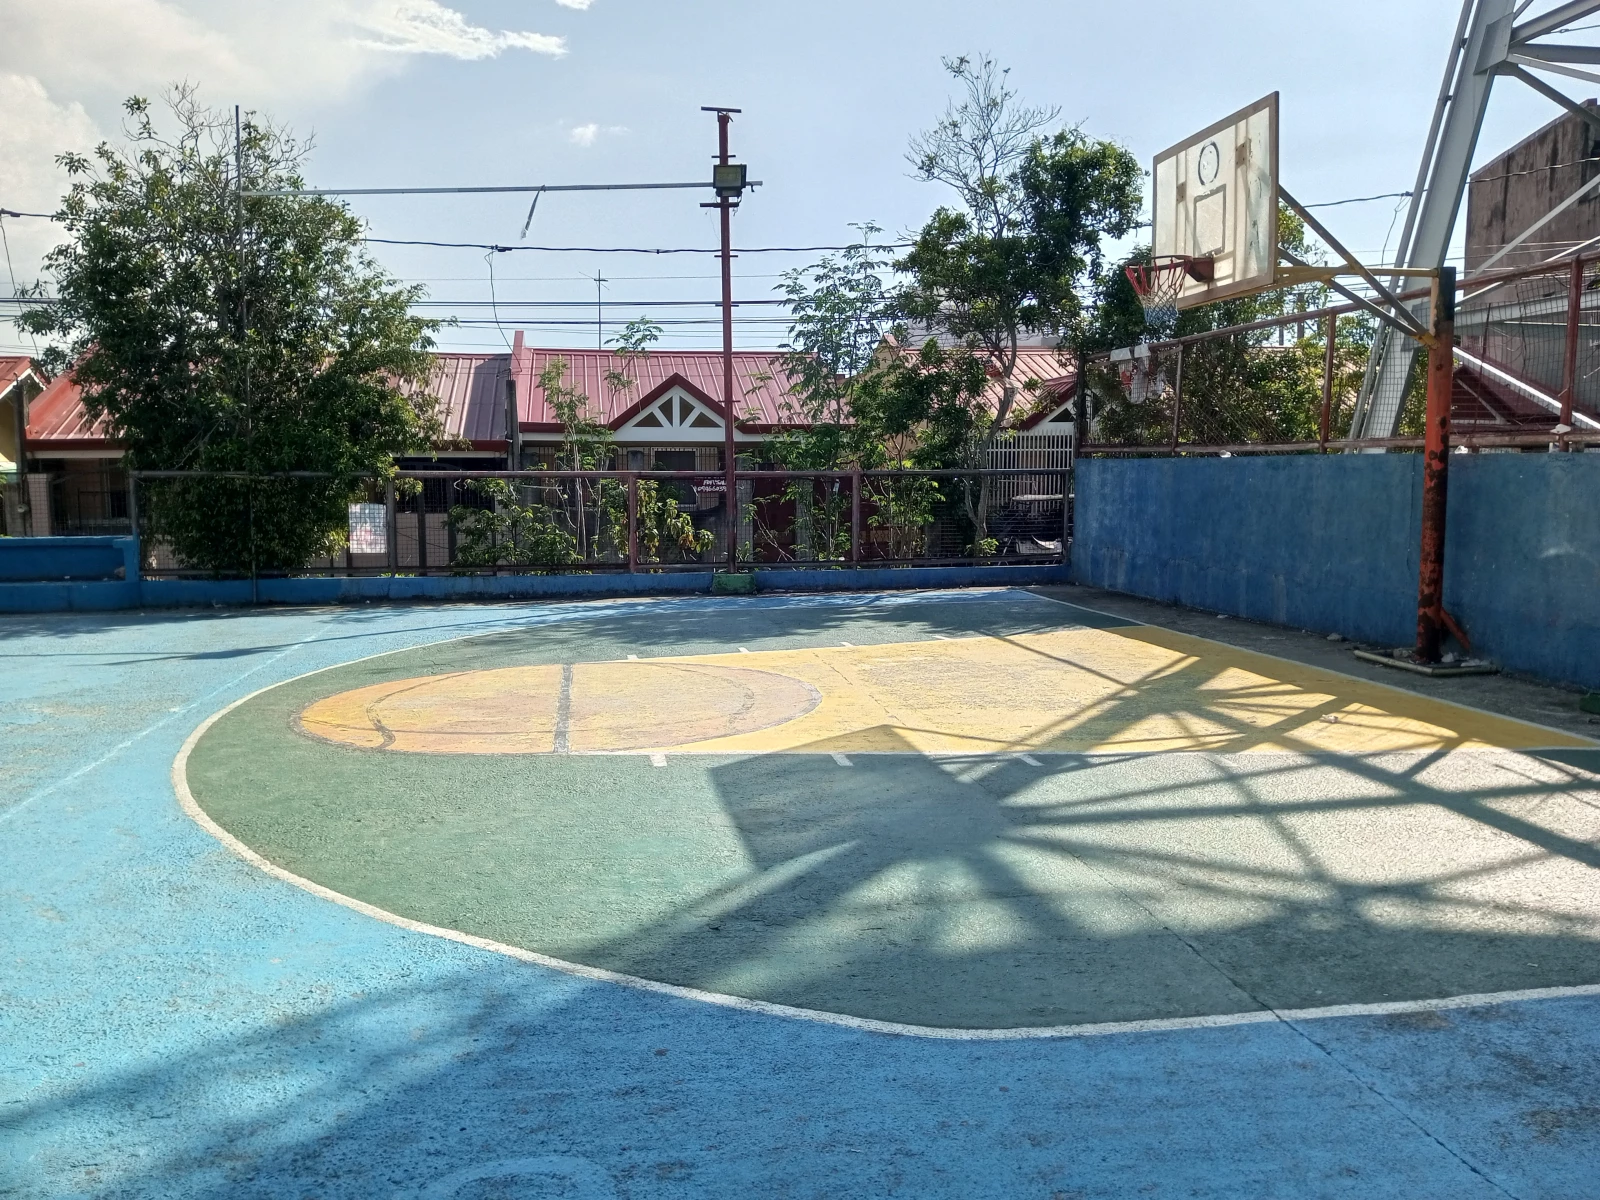 San Pedro Basketball Court: SJV9 PH1 Basketball Court Courts of the World